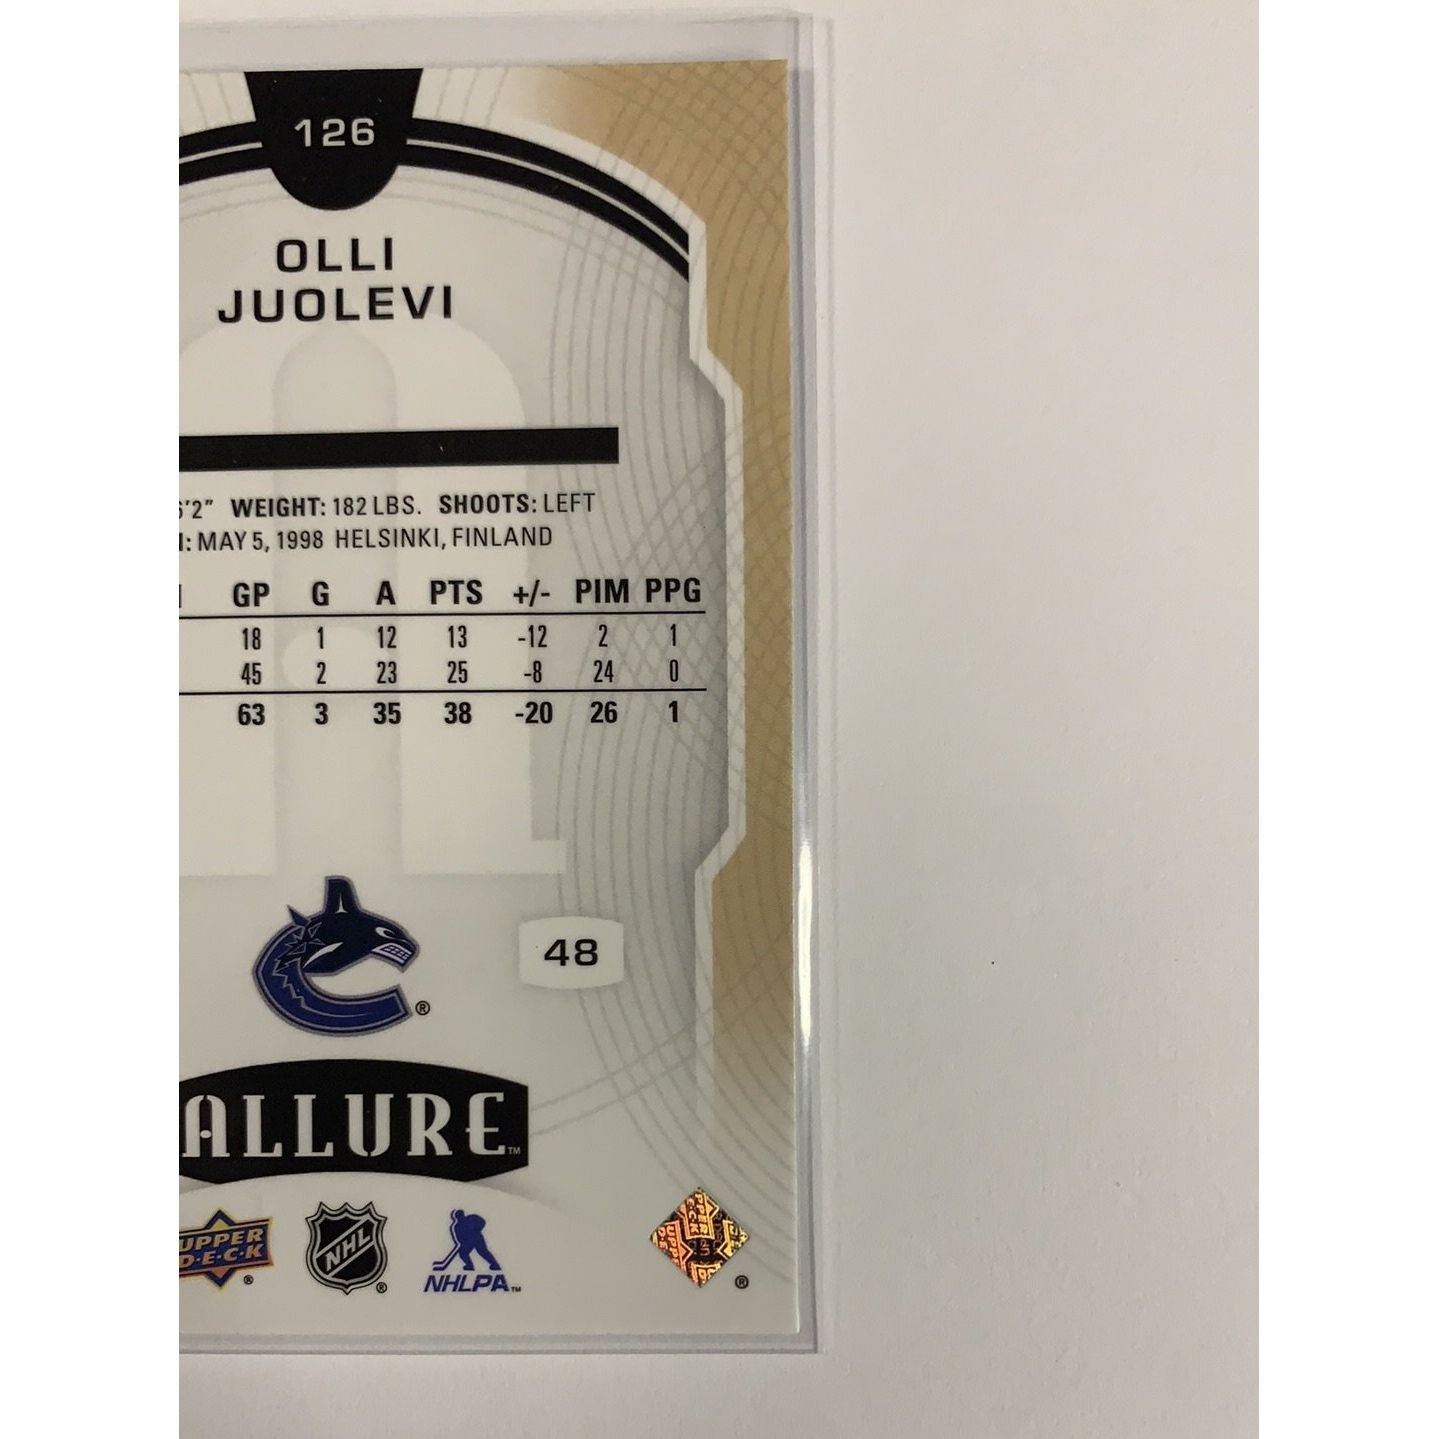  2020-21 Allure Olli Juolevi Rookie Card  Local Legends Cards & Collectibles